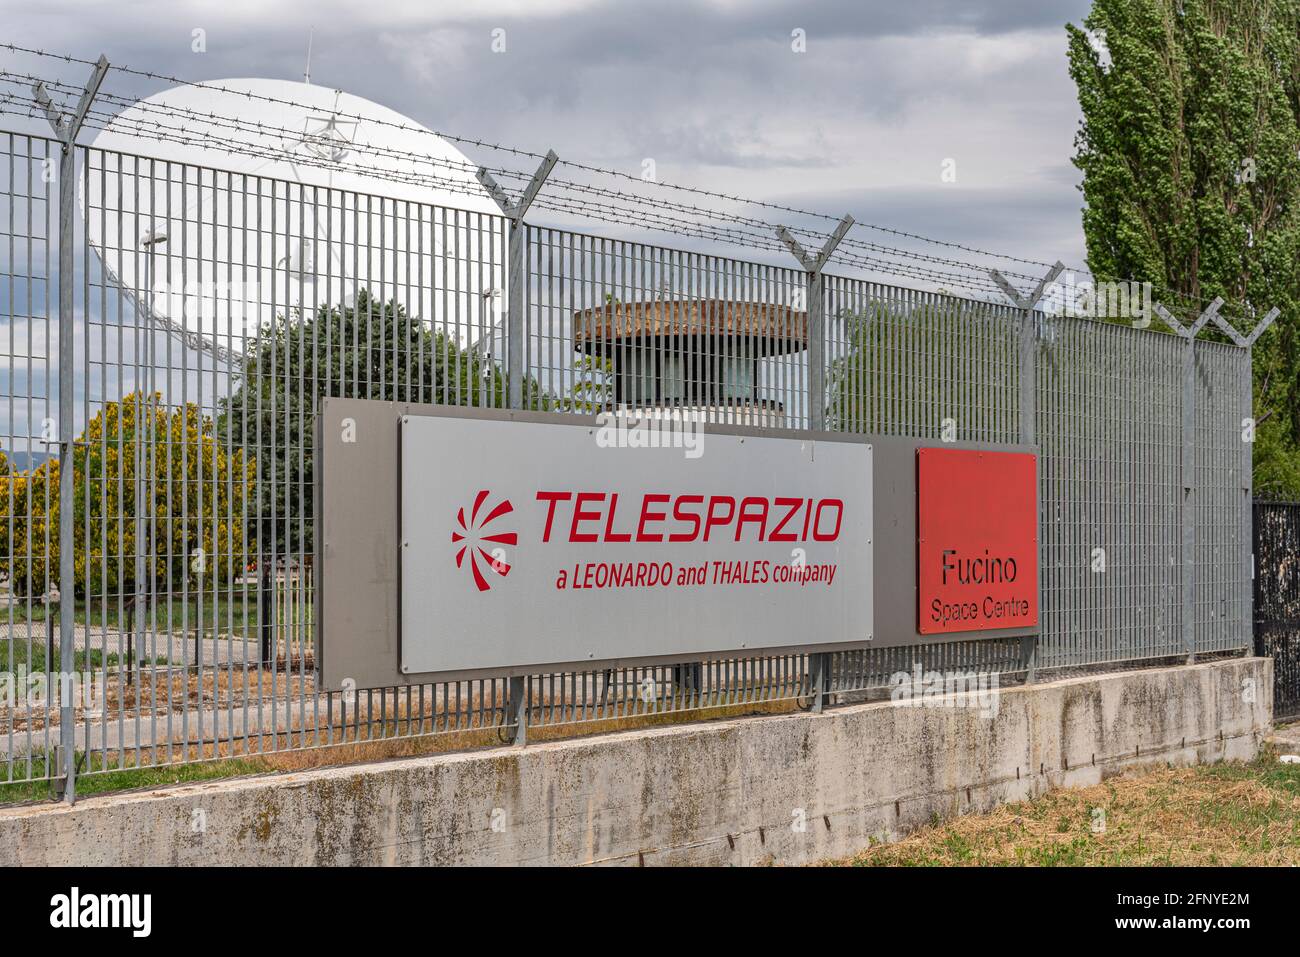 Telespazio space center in Fucino. Satellite dish for the in-orbit satellites and telecommunications services. Abruzzo, Italy, Europe Stock Photo